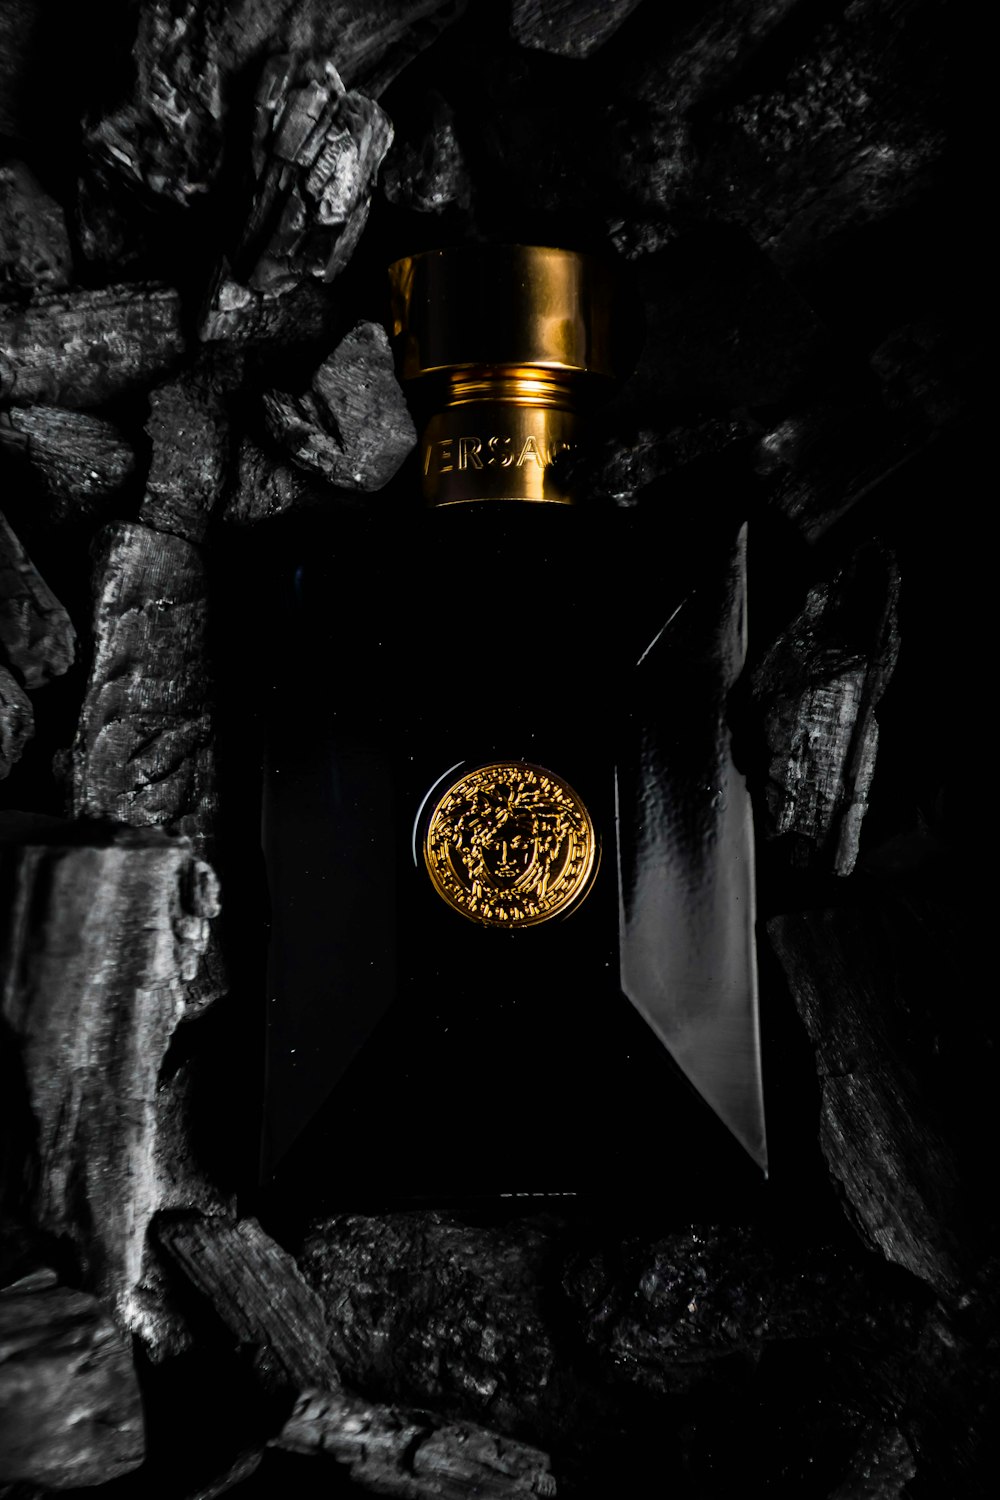 A black bottle with a gold emblem on it photo – Free Versace Image on  Unsplash